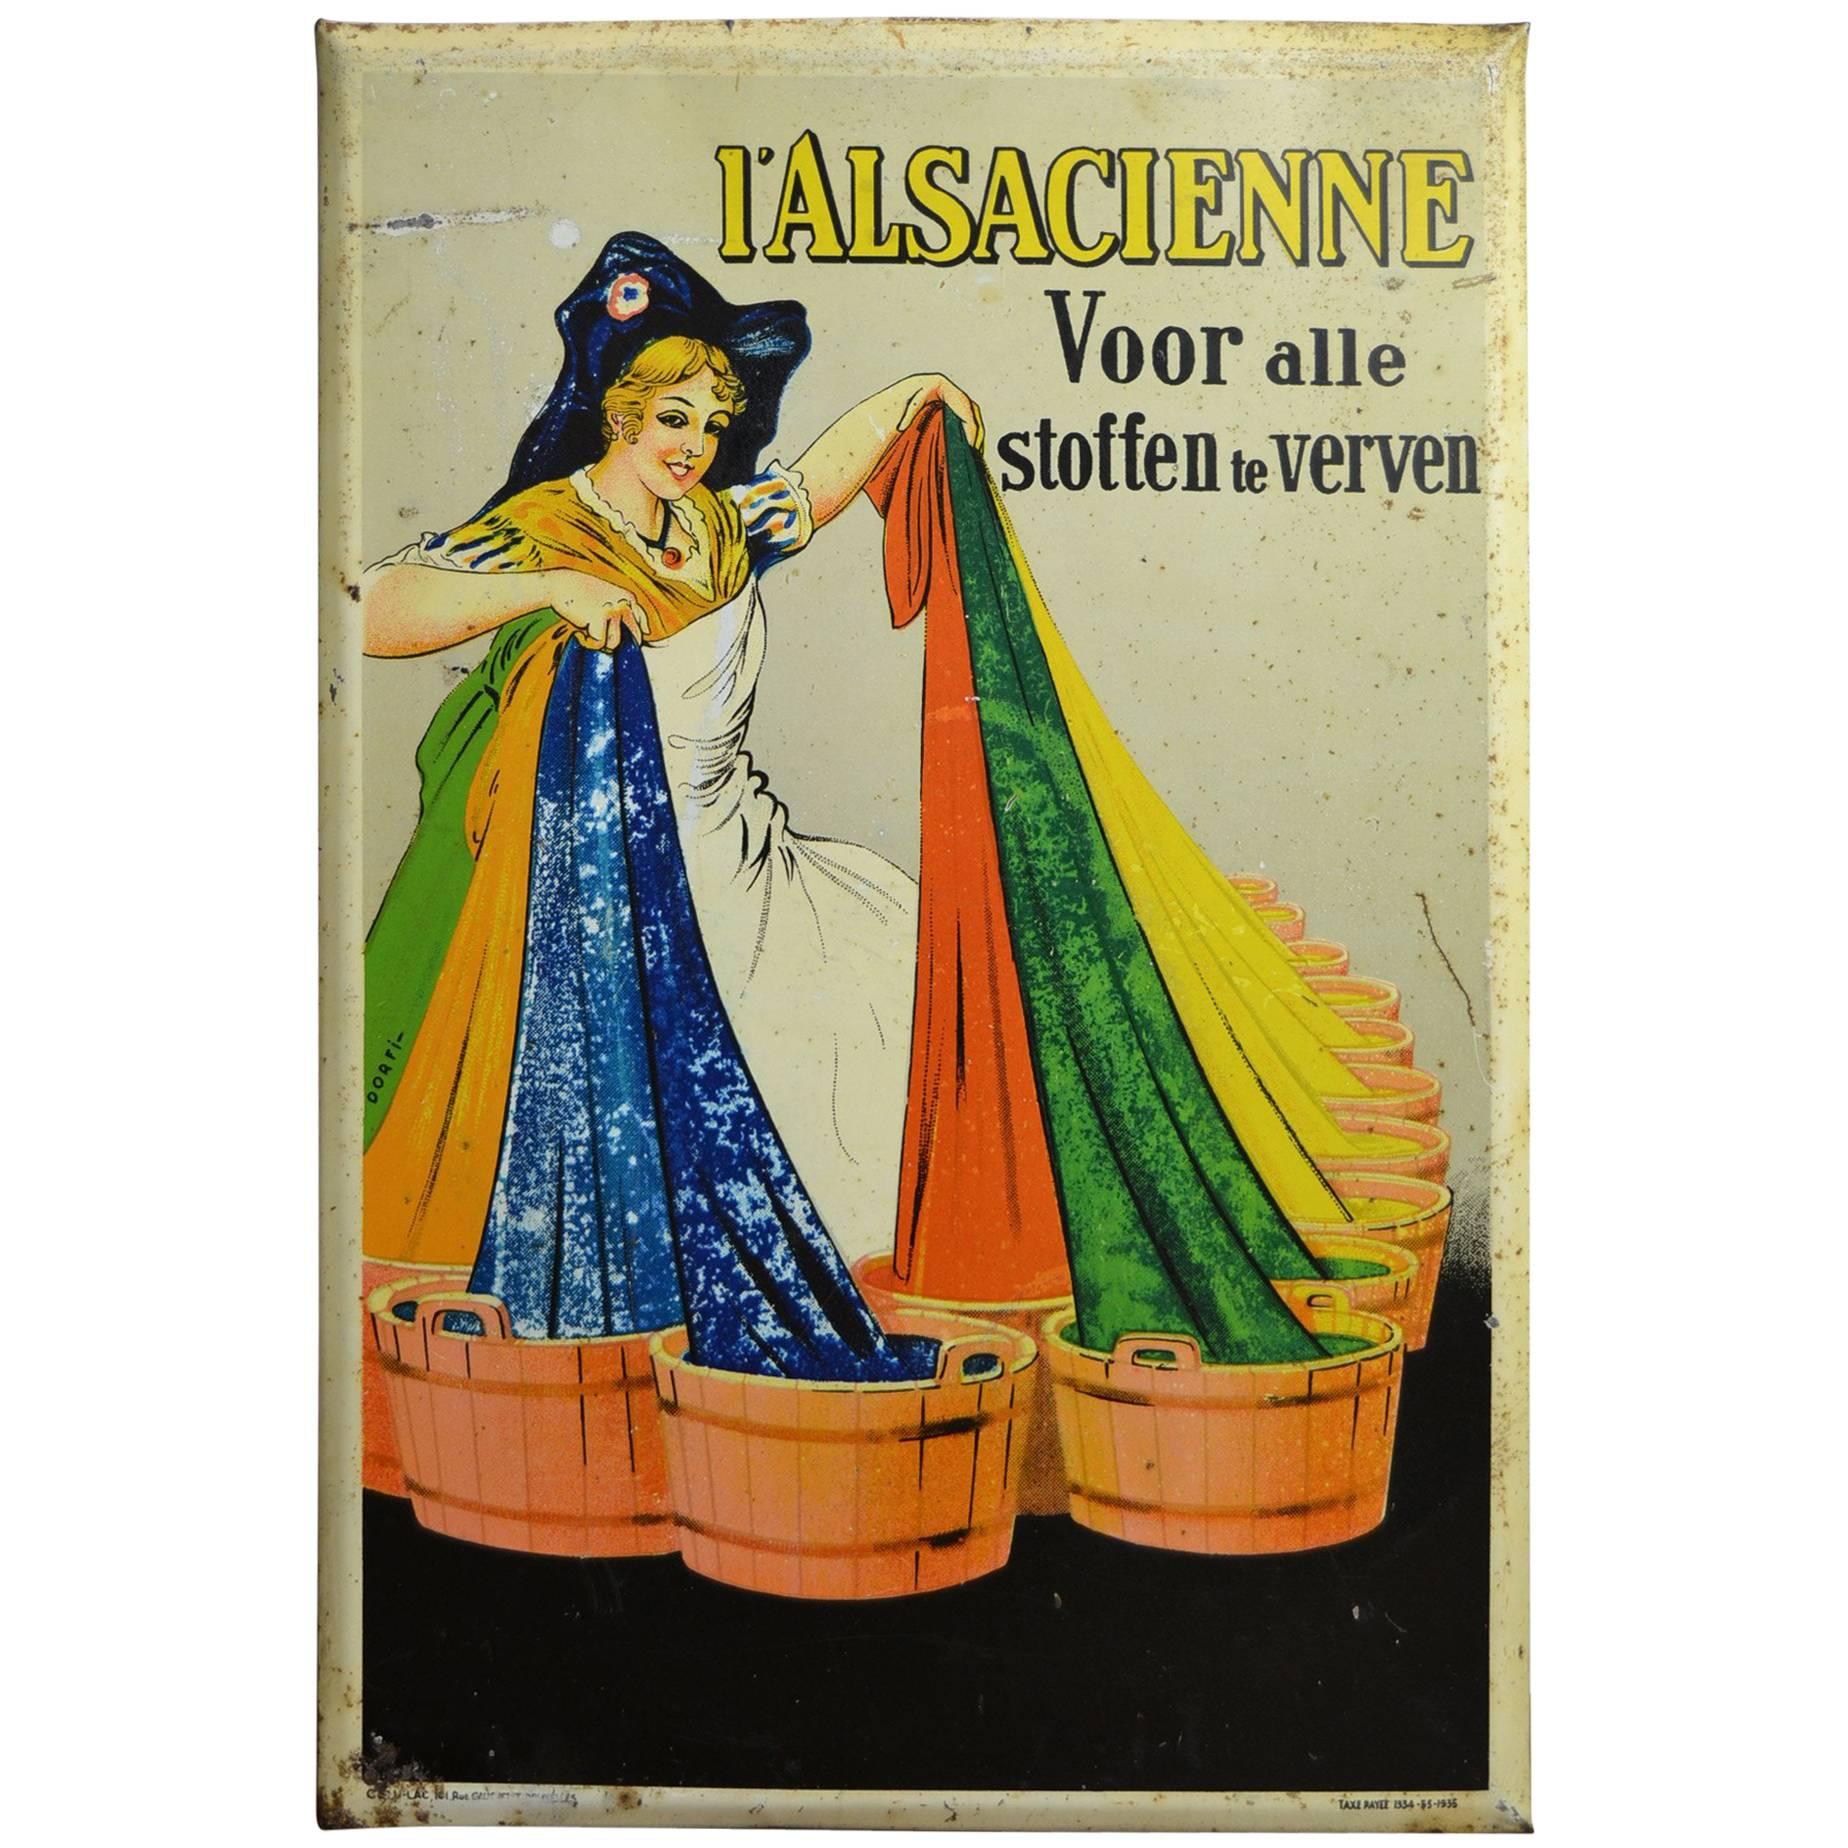 1935 Tin Sign by Dorfi for Fabric Paint L'Alsacienne